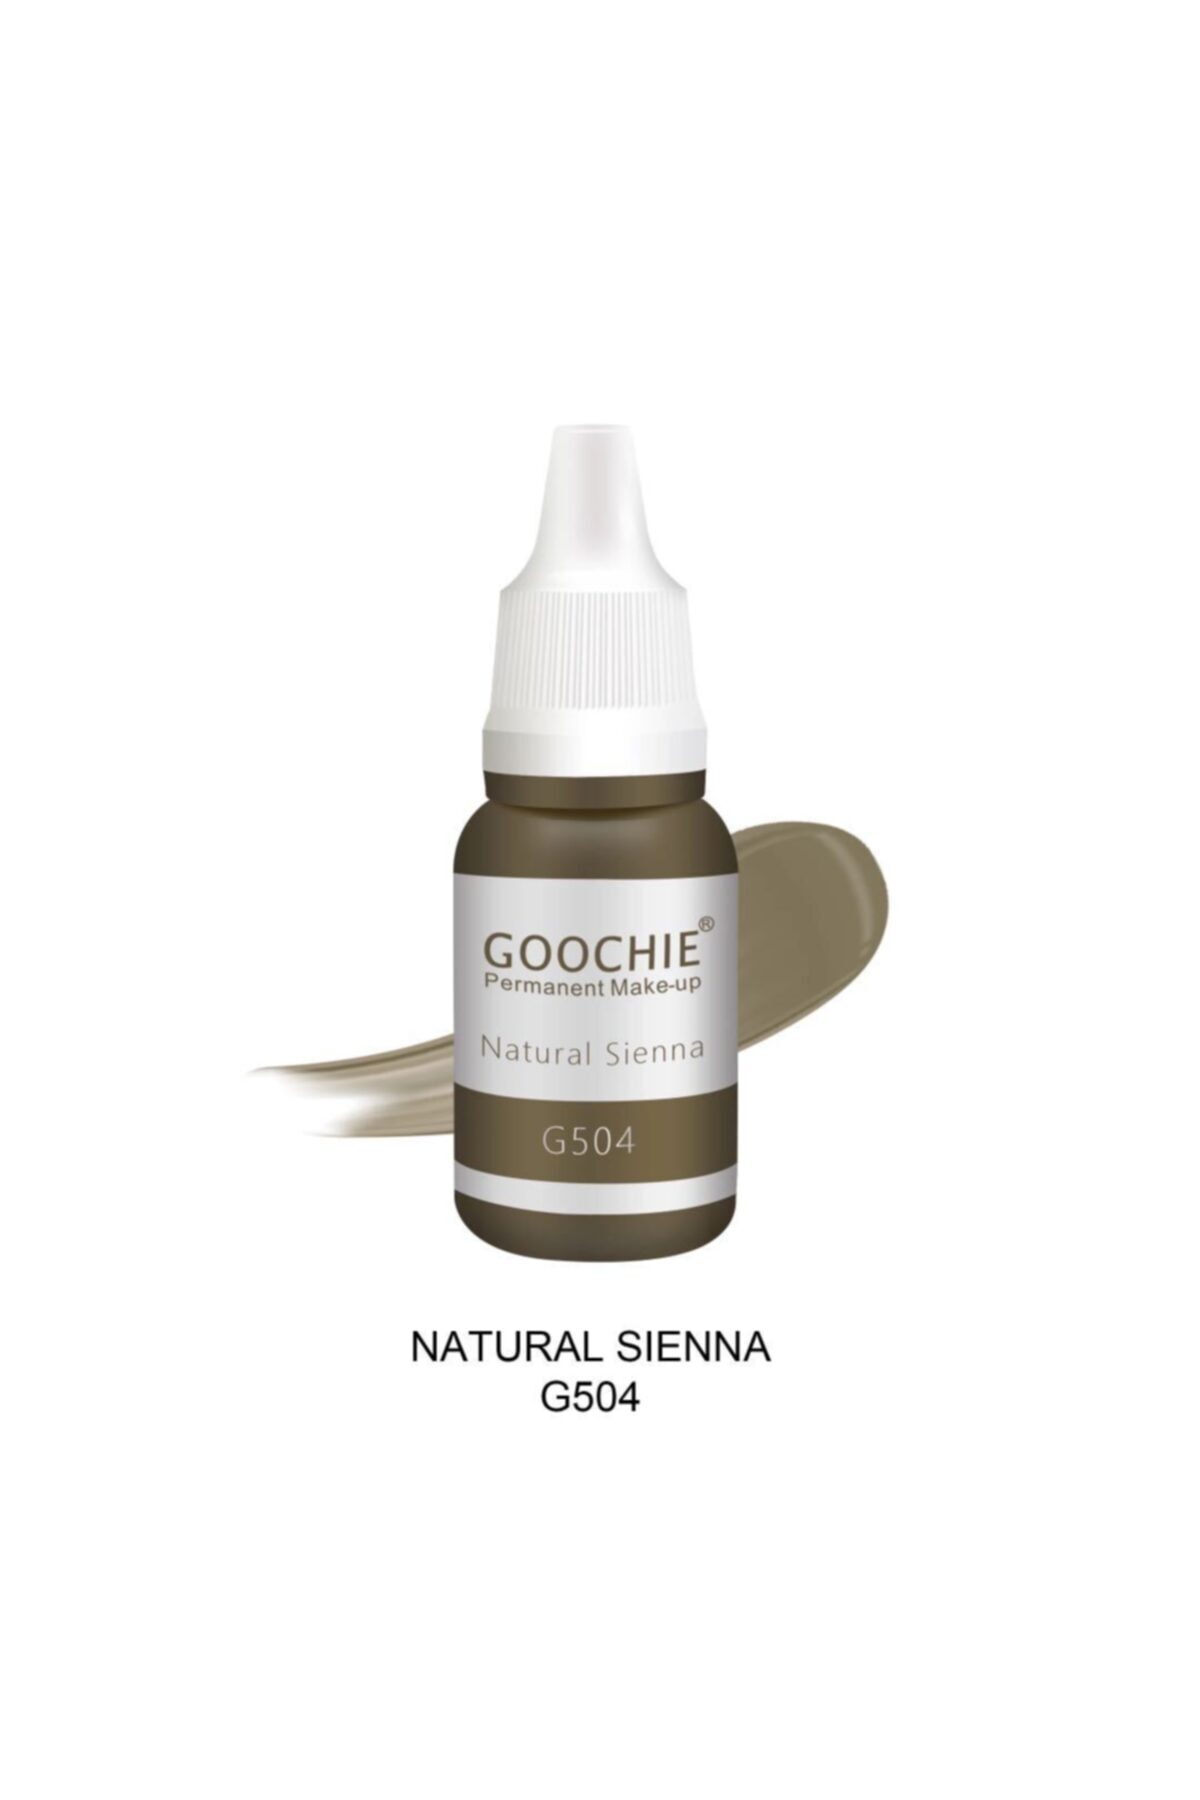 Goochie Goochıe G504 Natural Sienna (doğal Toprak Rengi) Kalıcı Makyaj Microblading Boyası (pigment) 10 Ml.